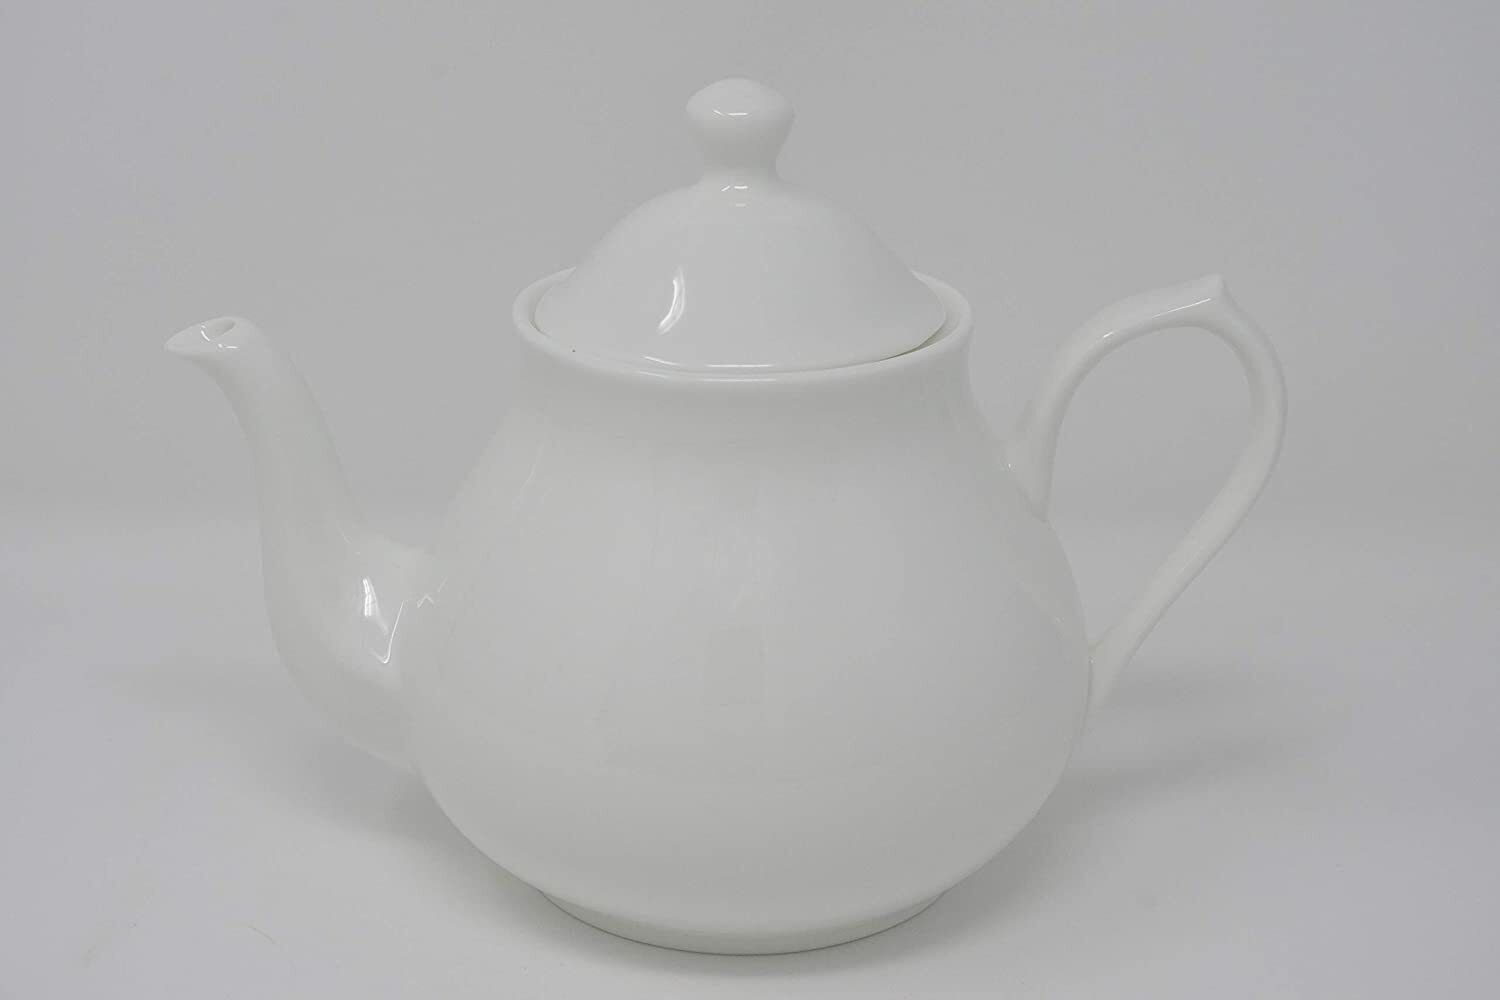 4 Cup Teapot White Bone China (71031) Tea Pot Classic Style 